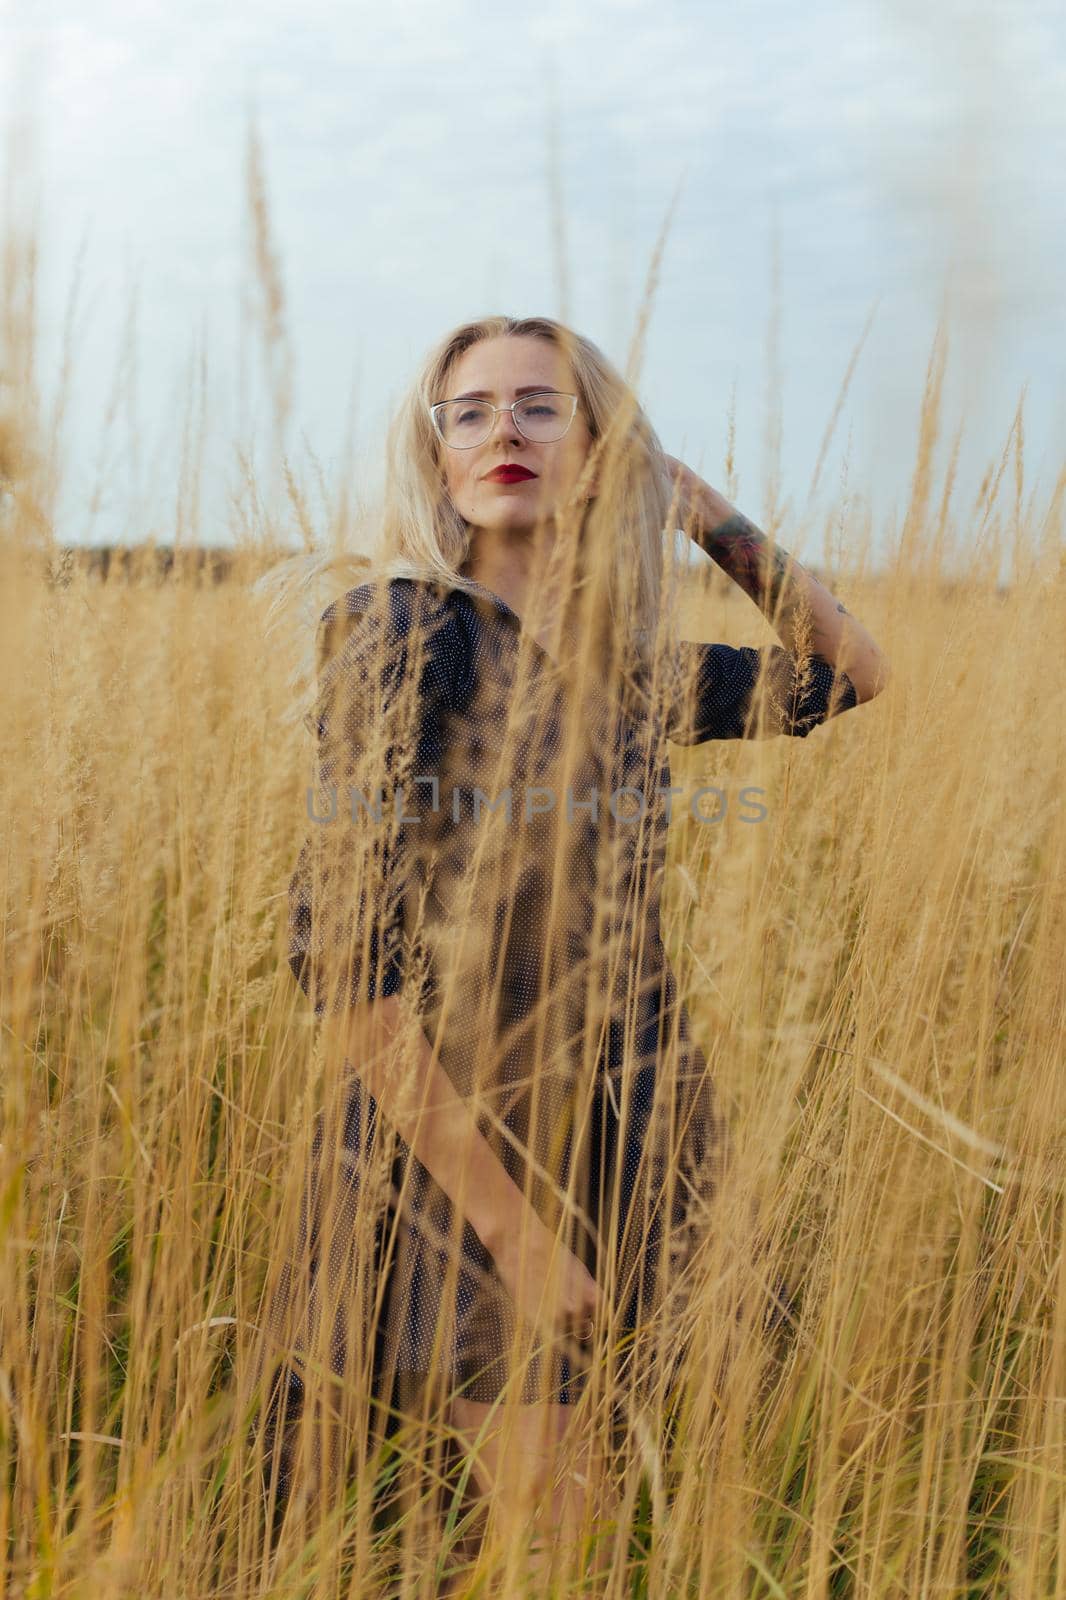 Beautiful girl villager posing in a dress in the field